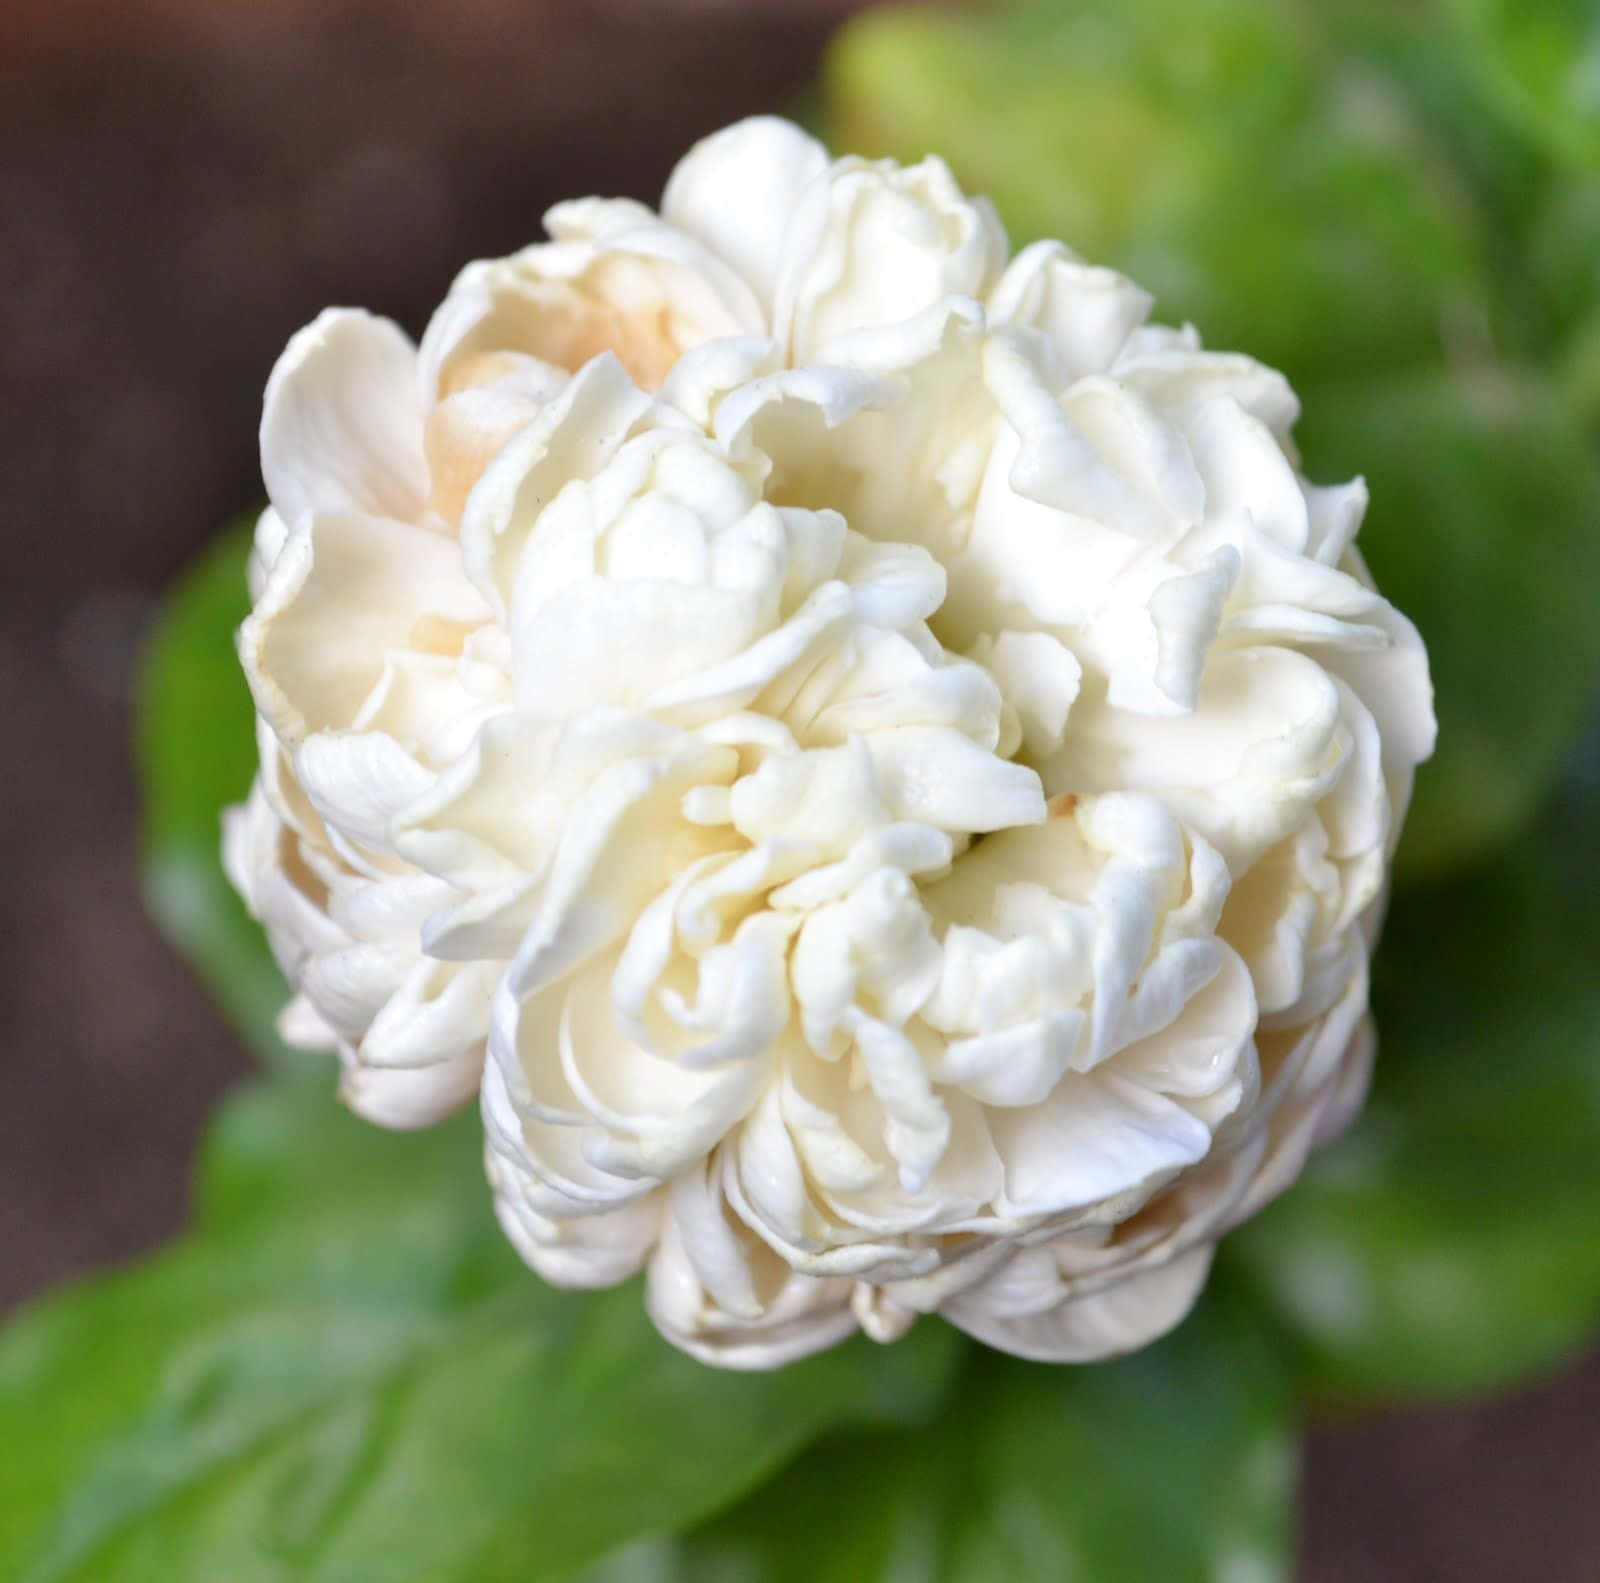 White jasmine flowers closeup petals spring 1080x1920 iPhone 8766S  Plus wallpaper background picture image